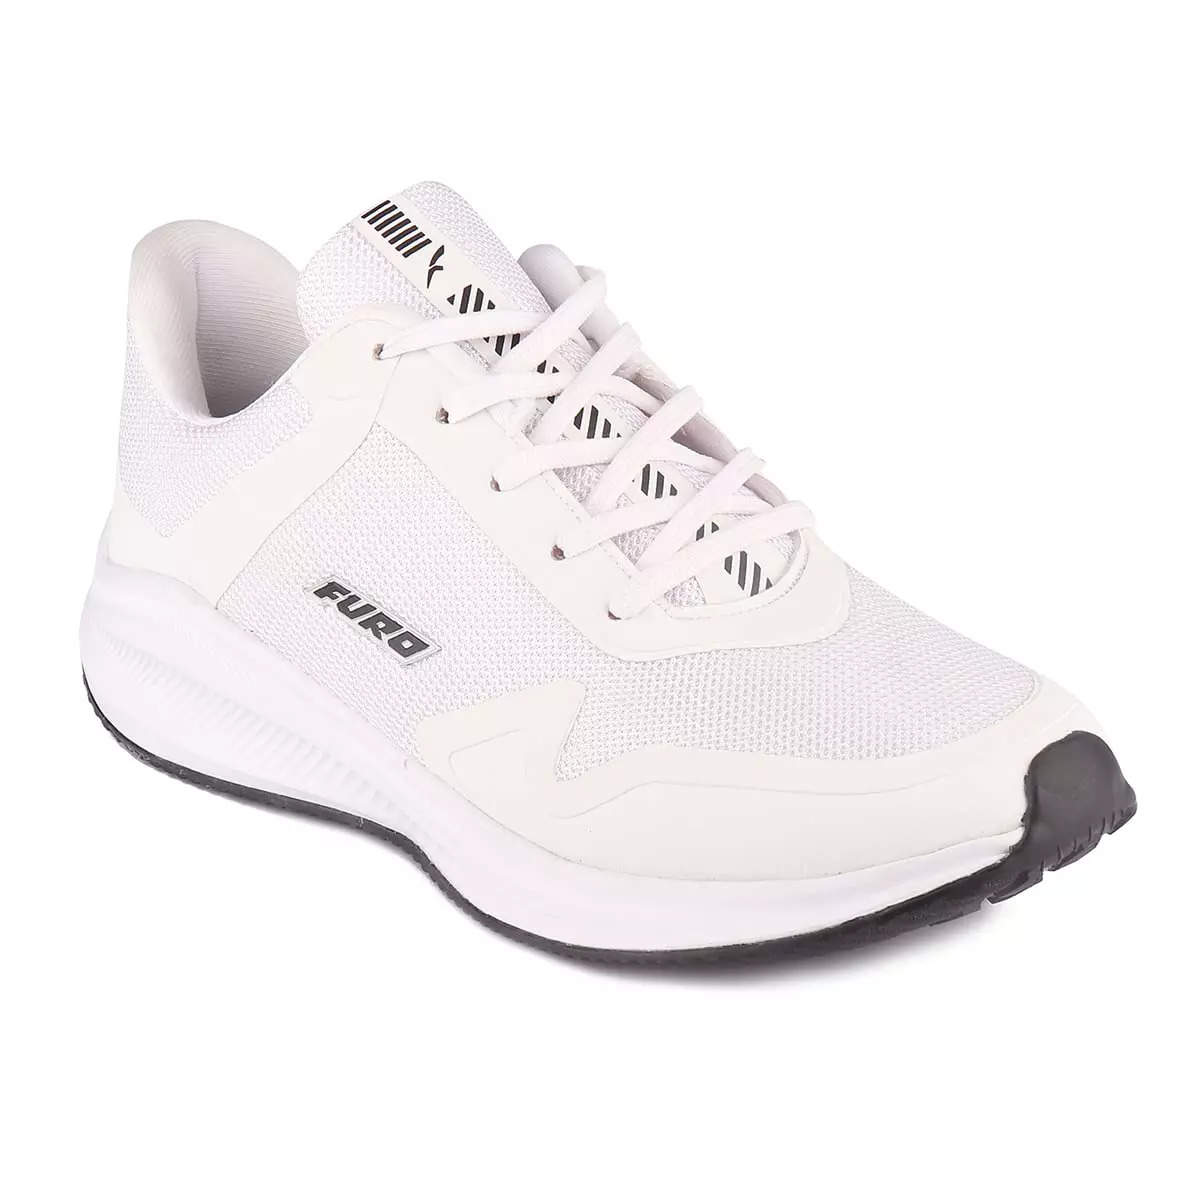 Running Shoes Size 7 | eBay